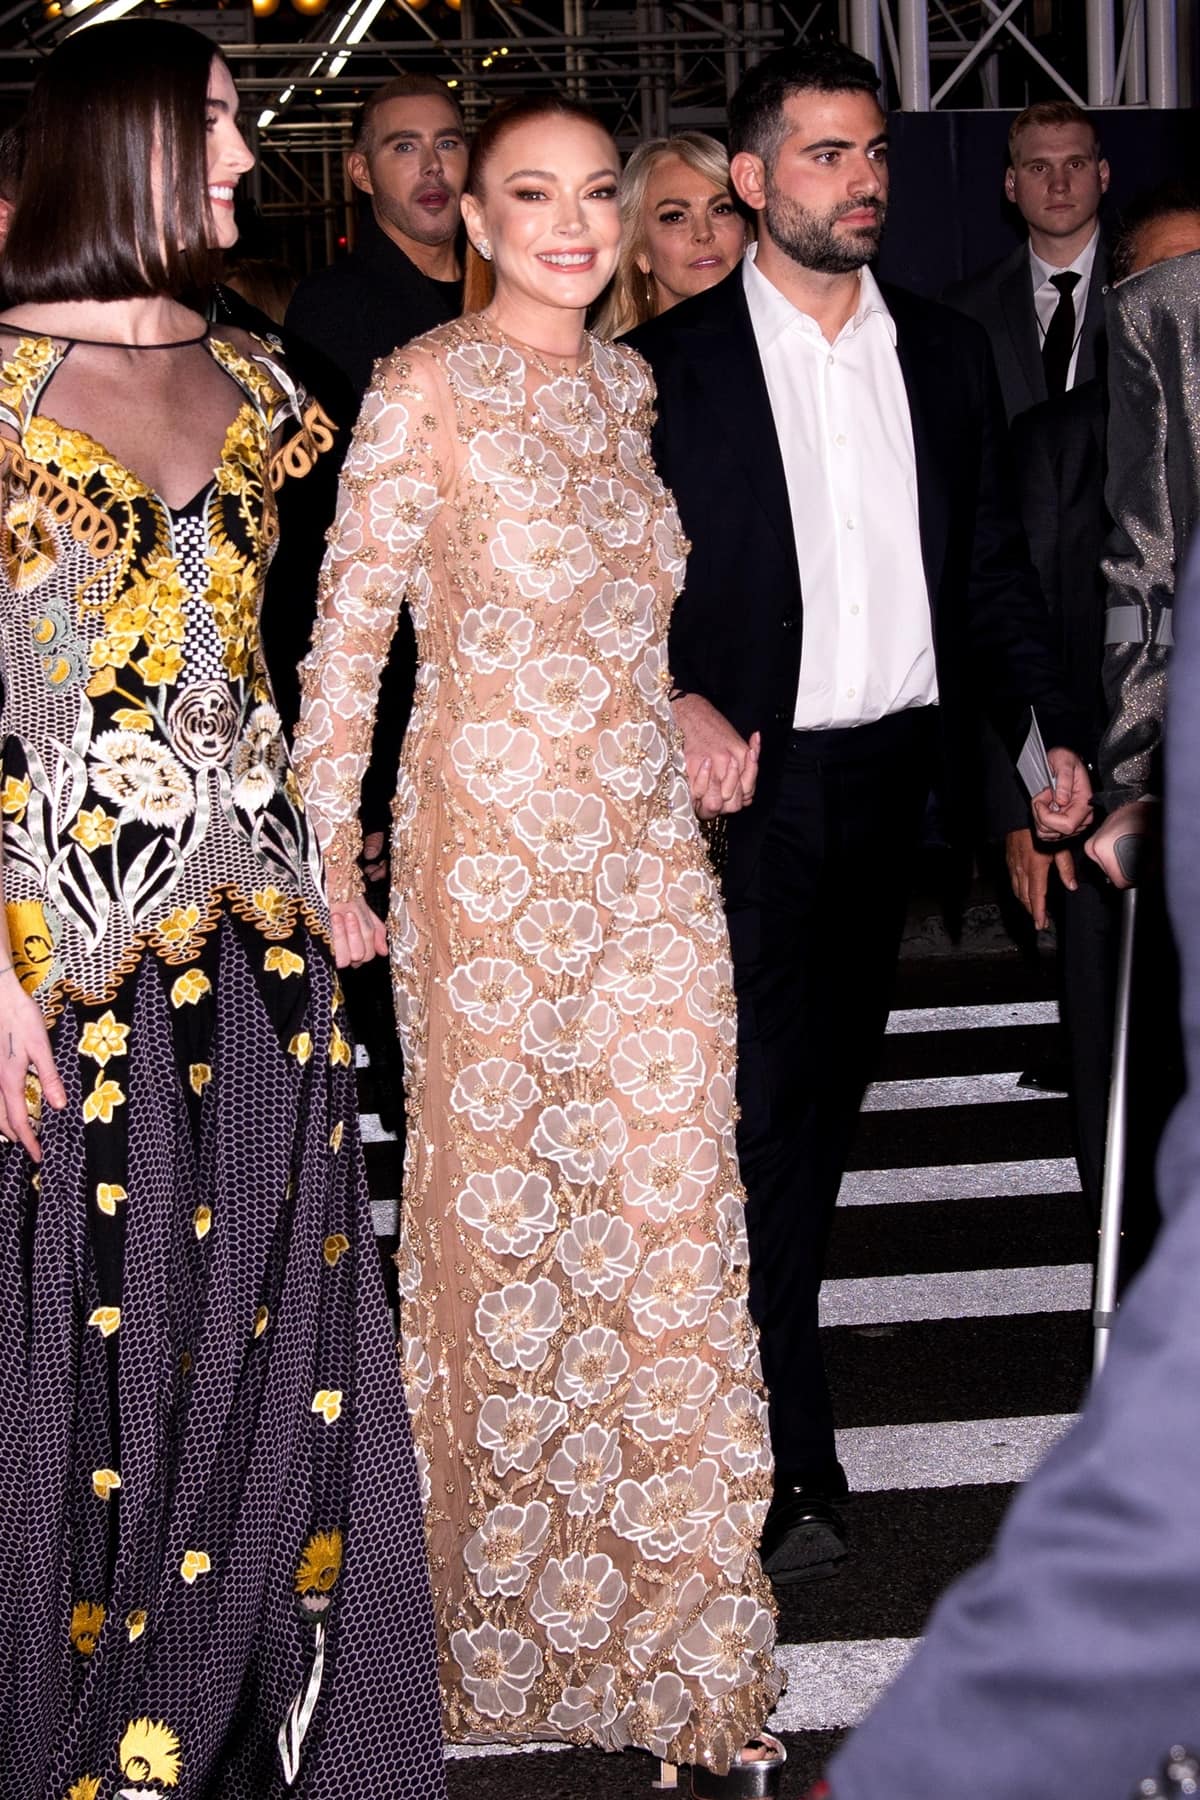 Lindsay Lohan with her husband Bader Shammas and her younger sister Aliana Taylor "Ali" Lohan at Netflix’s Falling For Christmas Celebratory Holiday Fan Screening